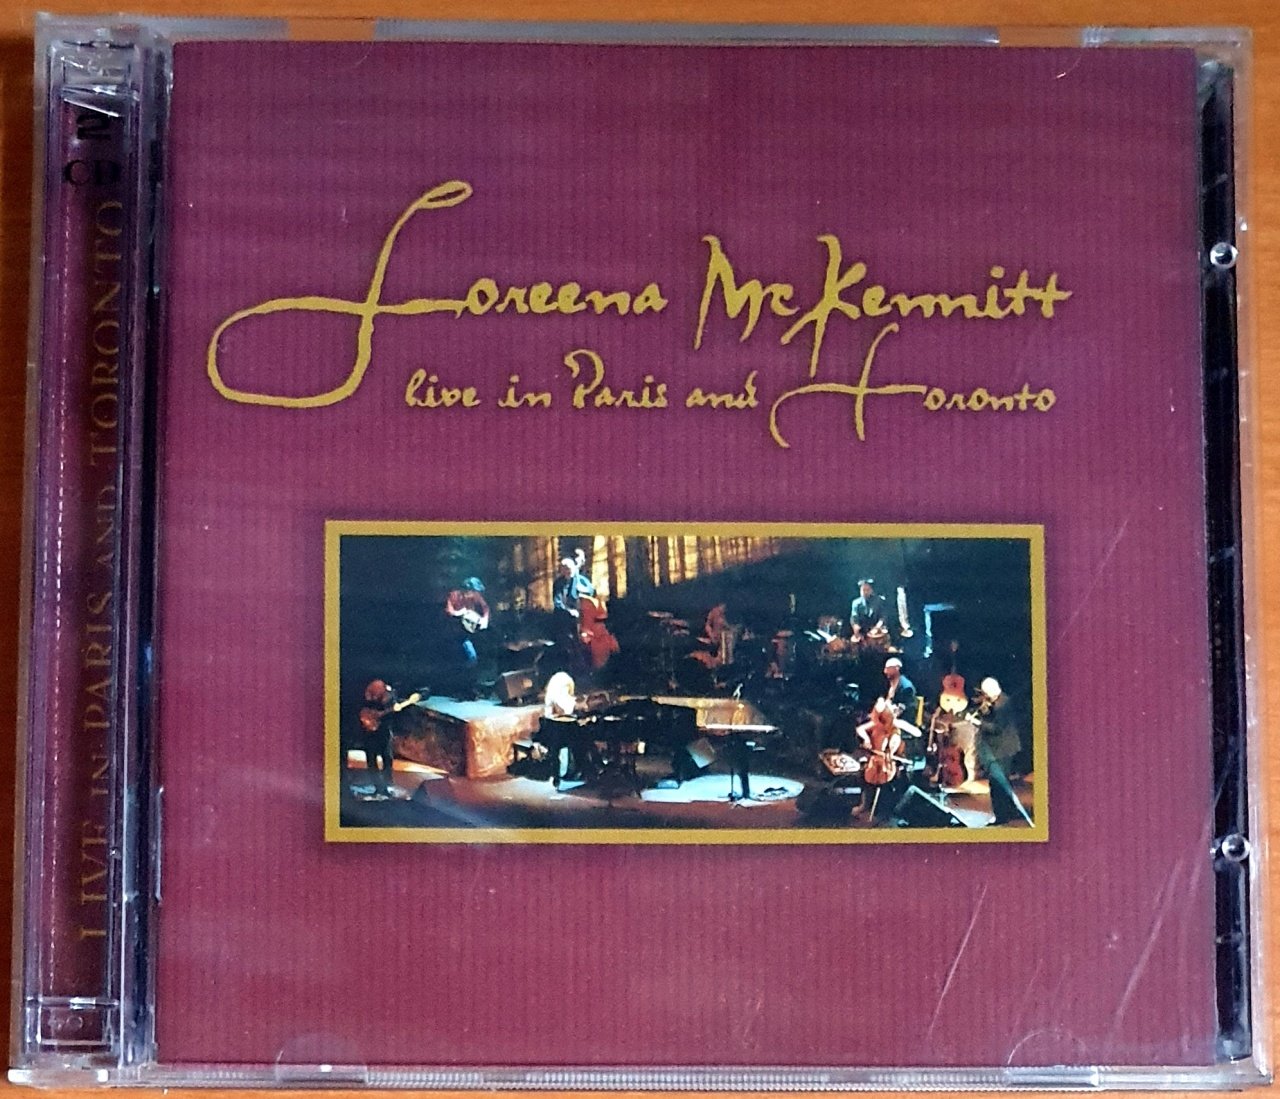 LOREENA McKENNITT - LIVE IN PARIS AND TORONTO (1999) - 2CD 2.EL